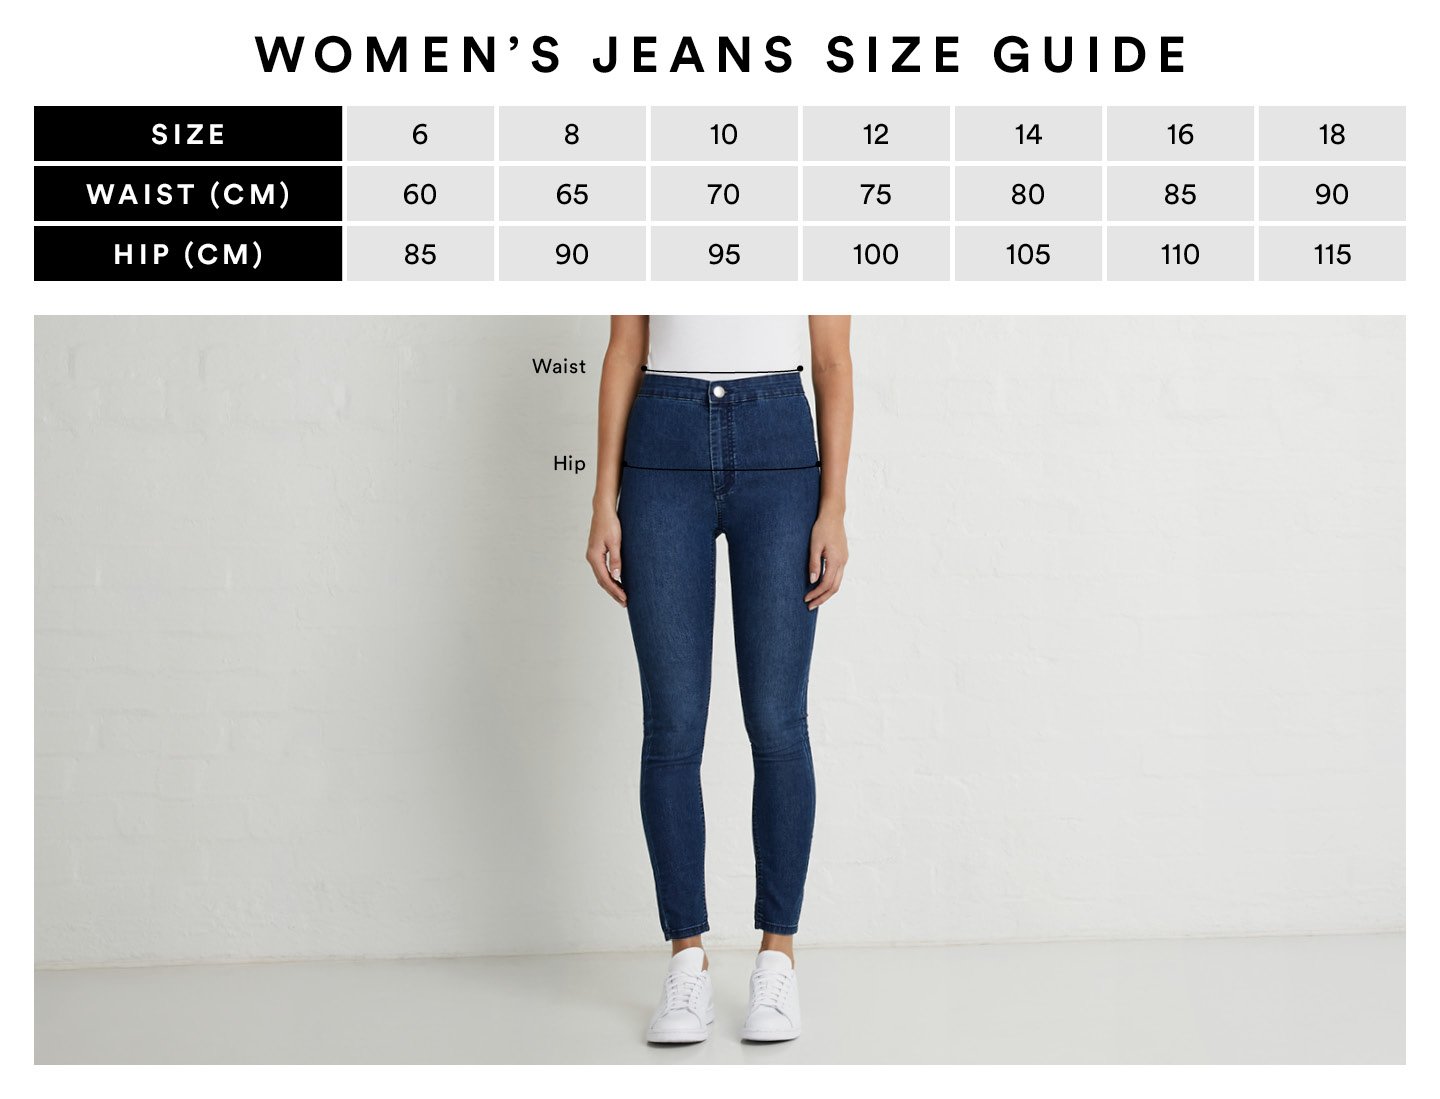 size 6 jeans waist